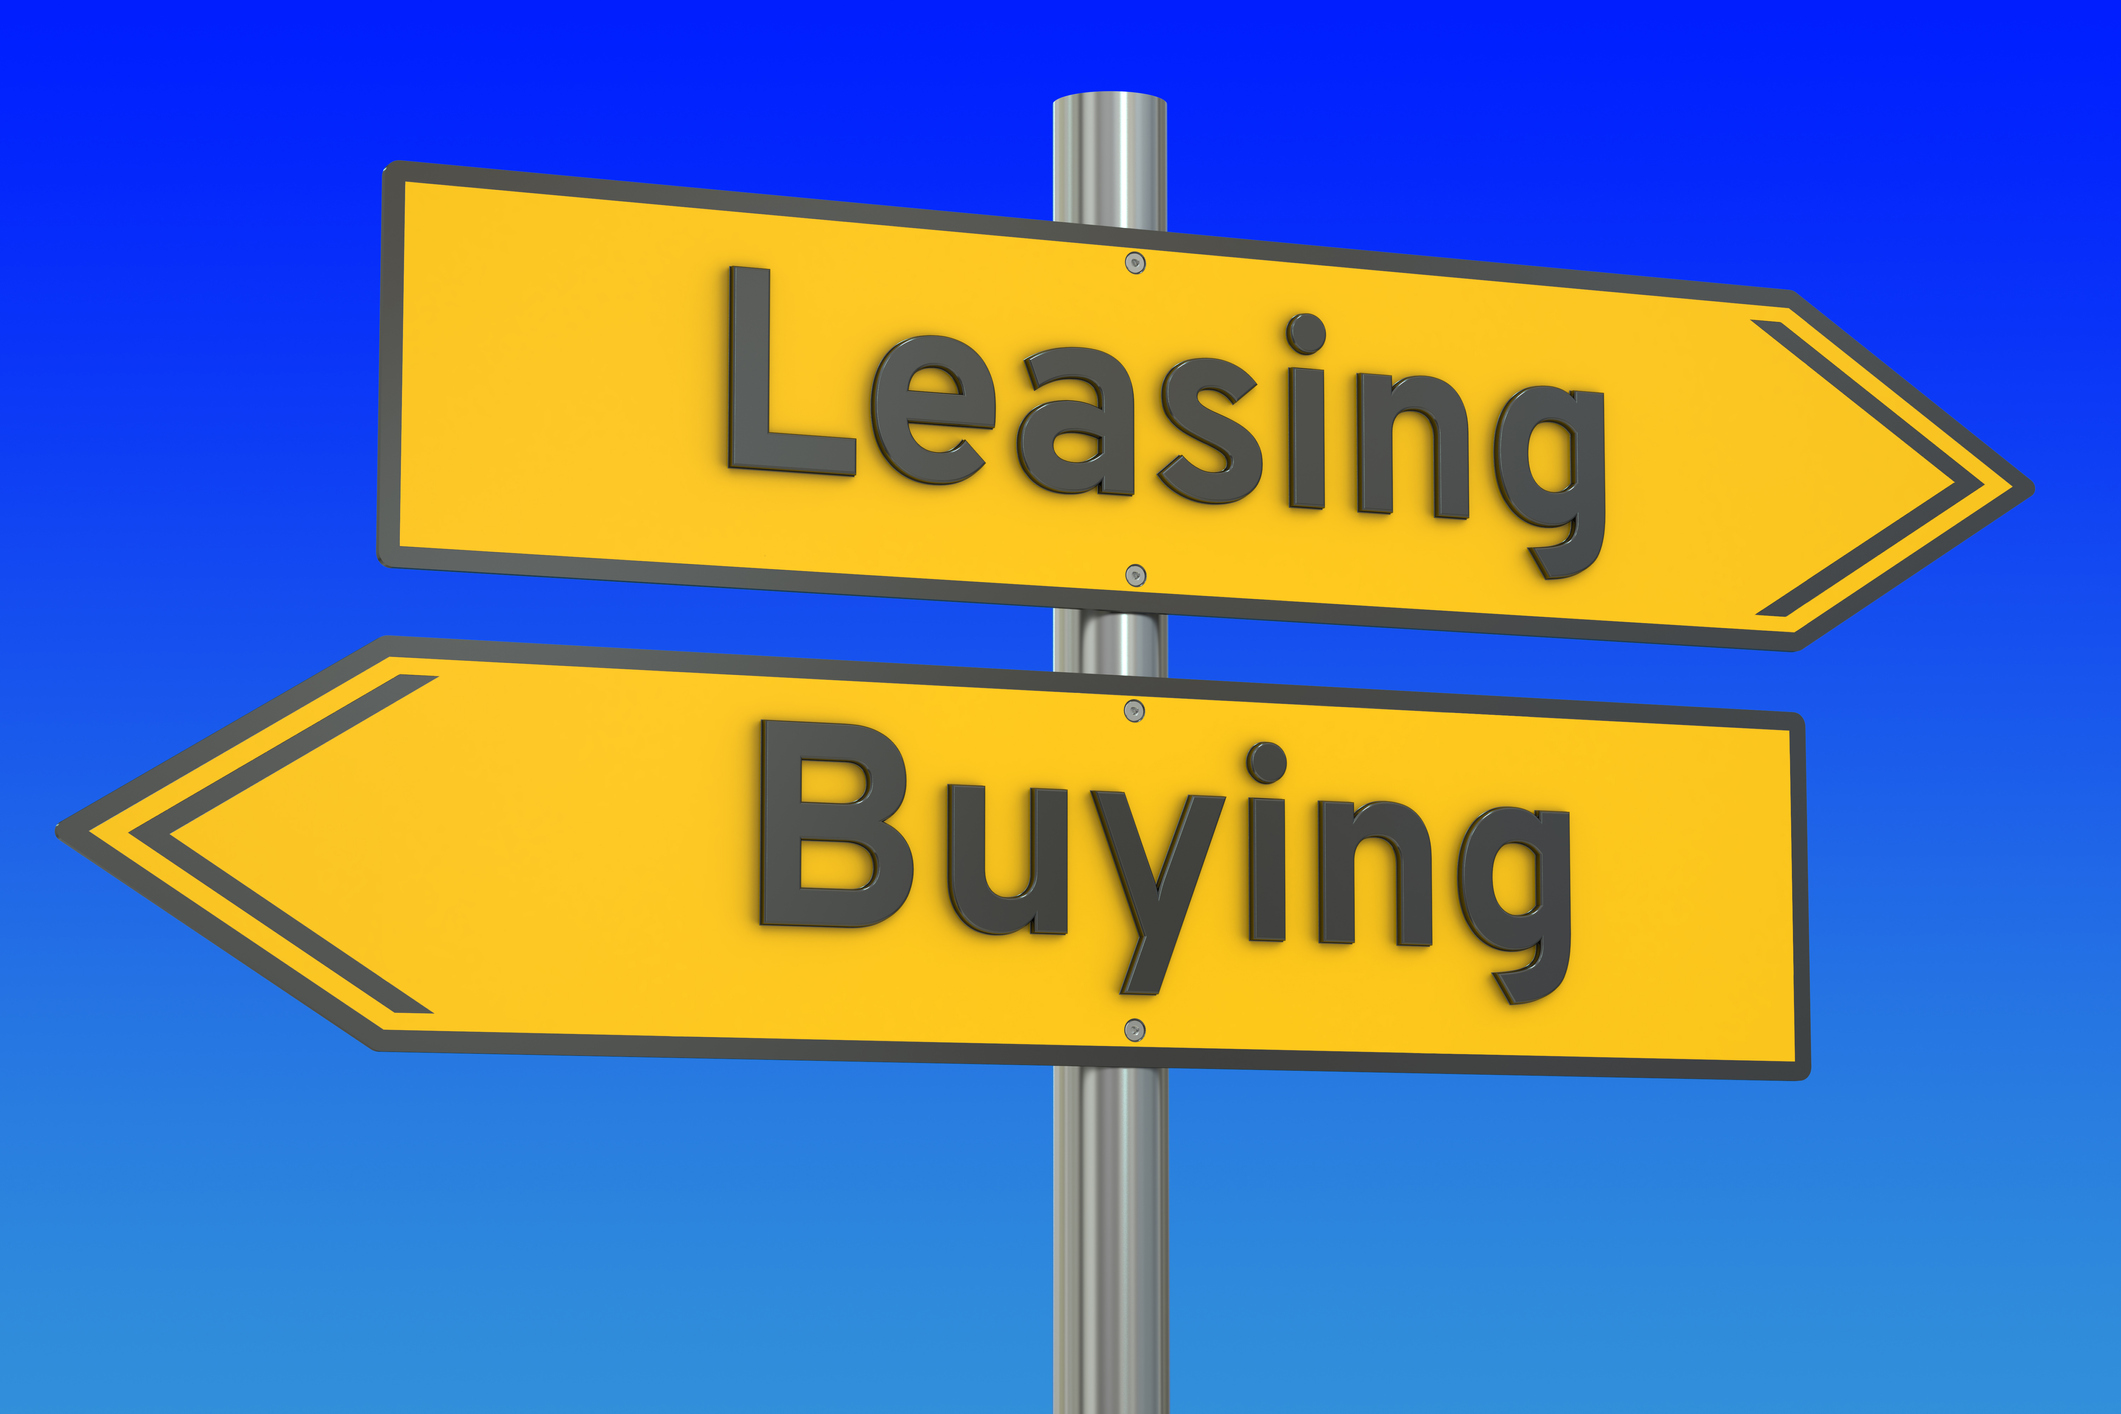 Leasing or buying